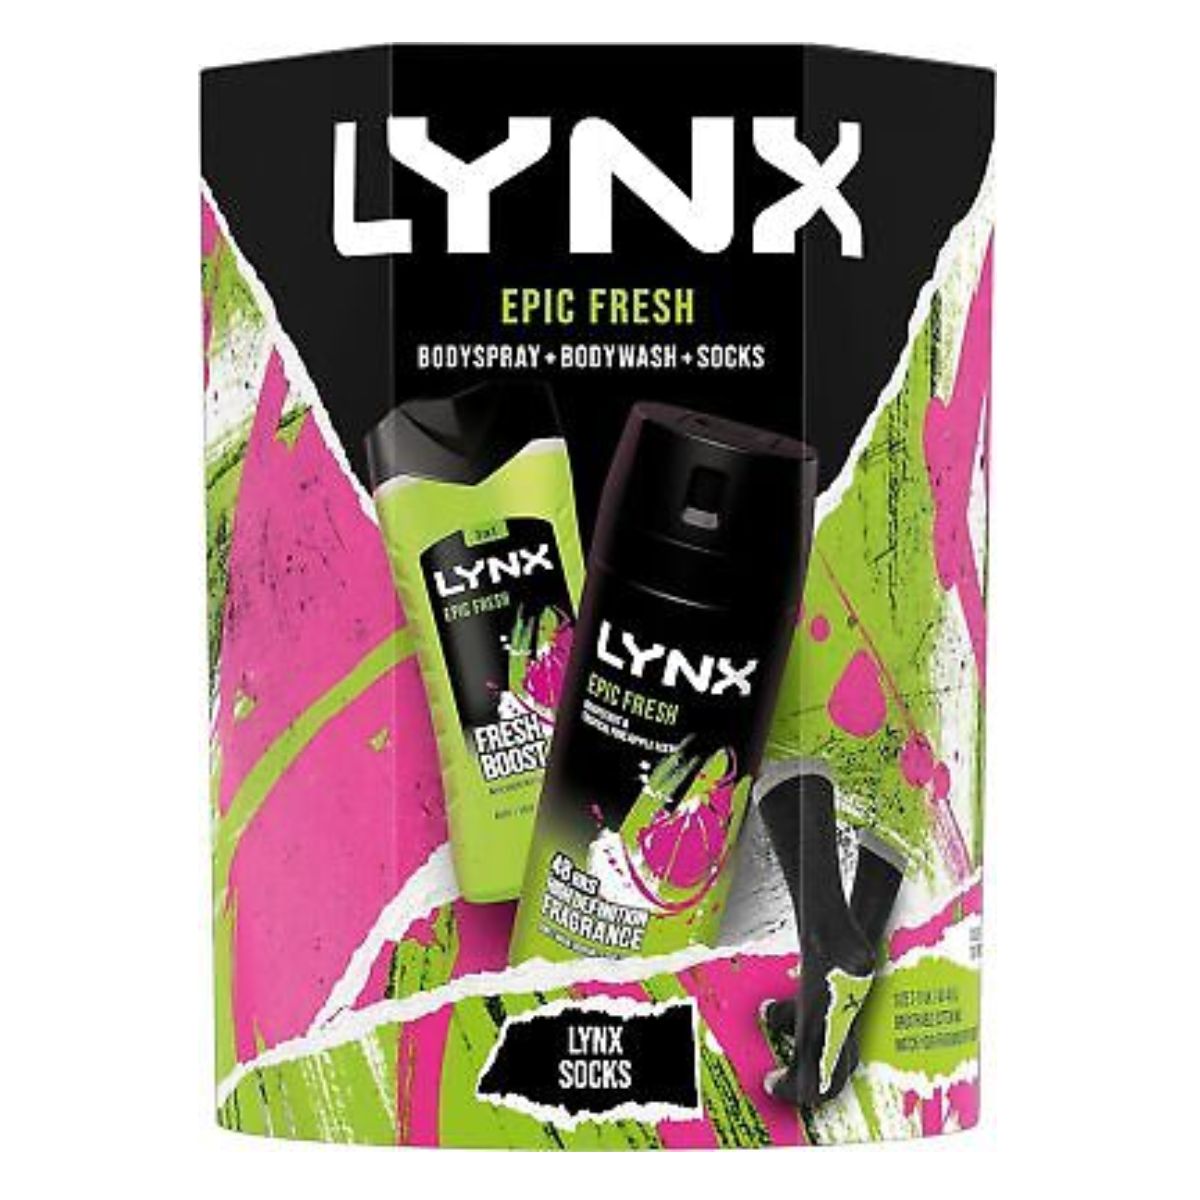 Lynx - Epic Fresh Duo & Socks Deodorant Gift Set - 1pcs deodorant.